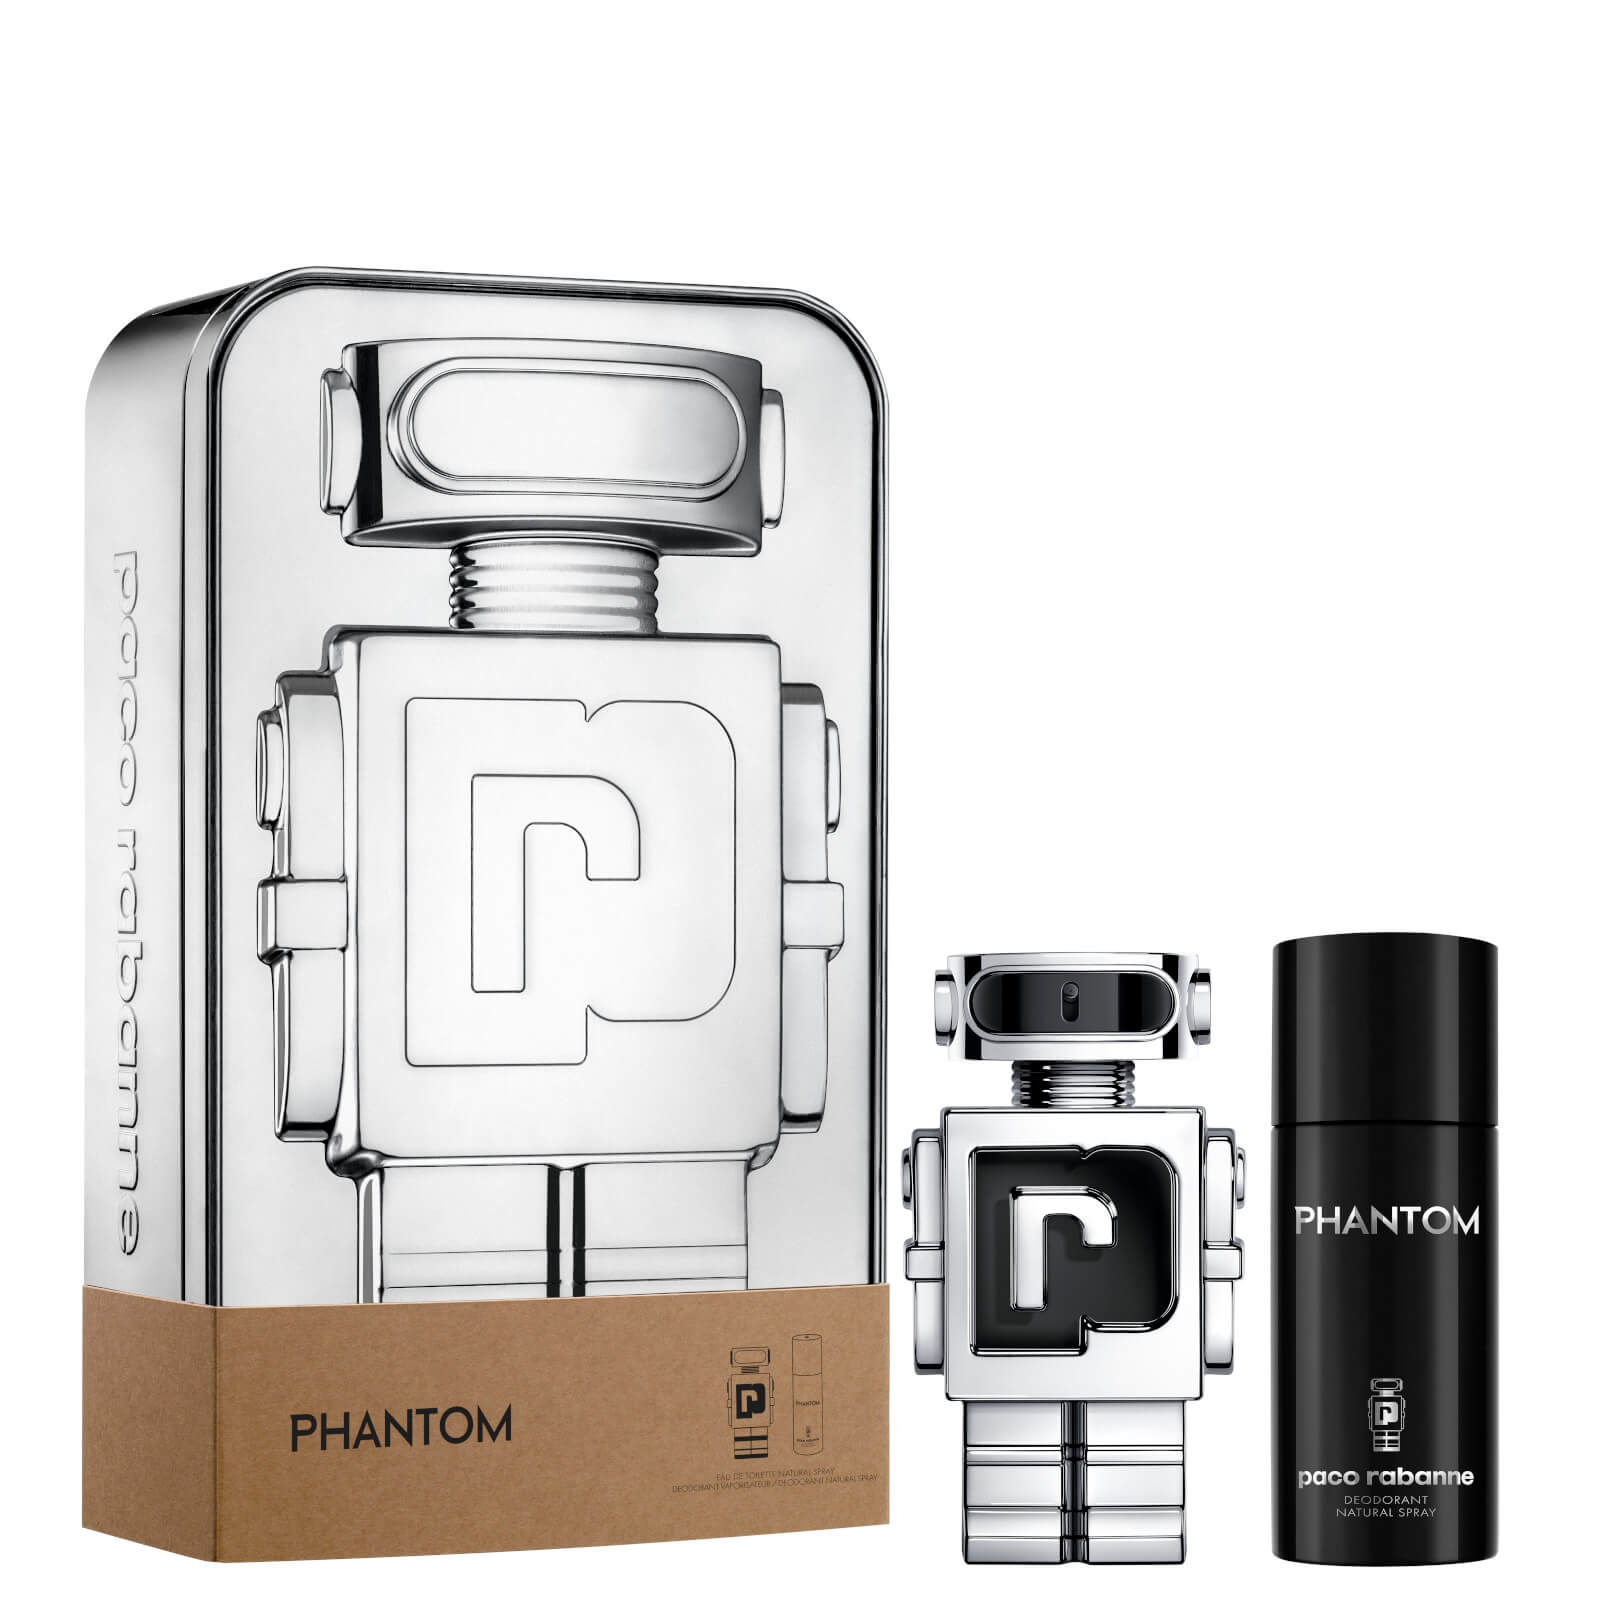 Paco Rabanne Christmas 2021 Phantom Eau de Toilette Spray 100ml Gift Set